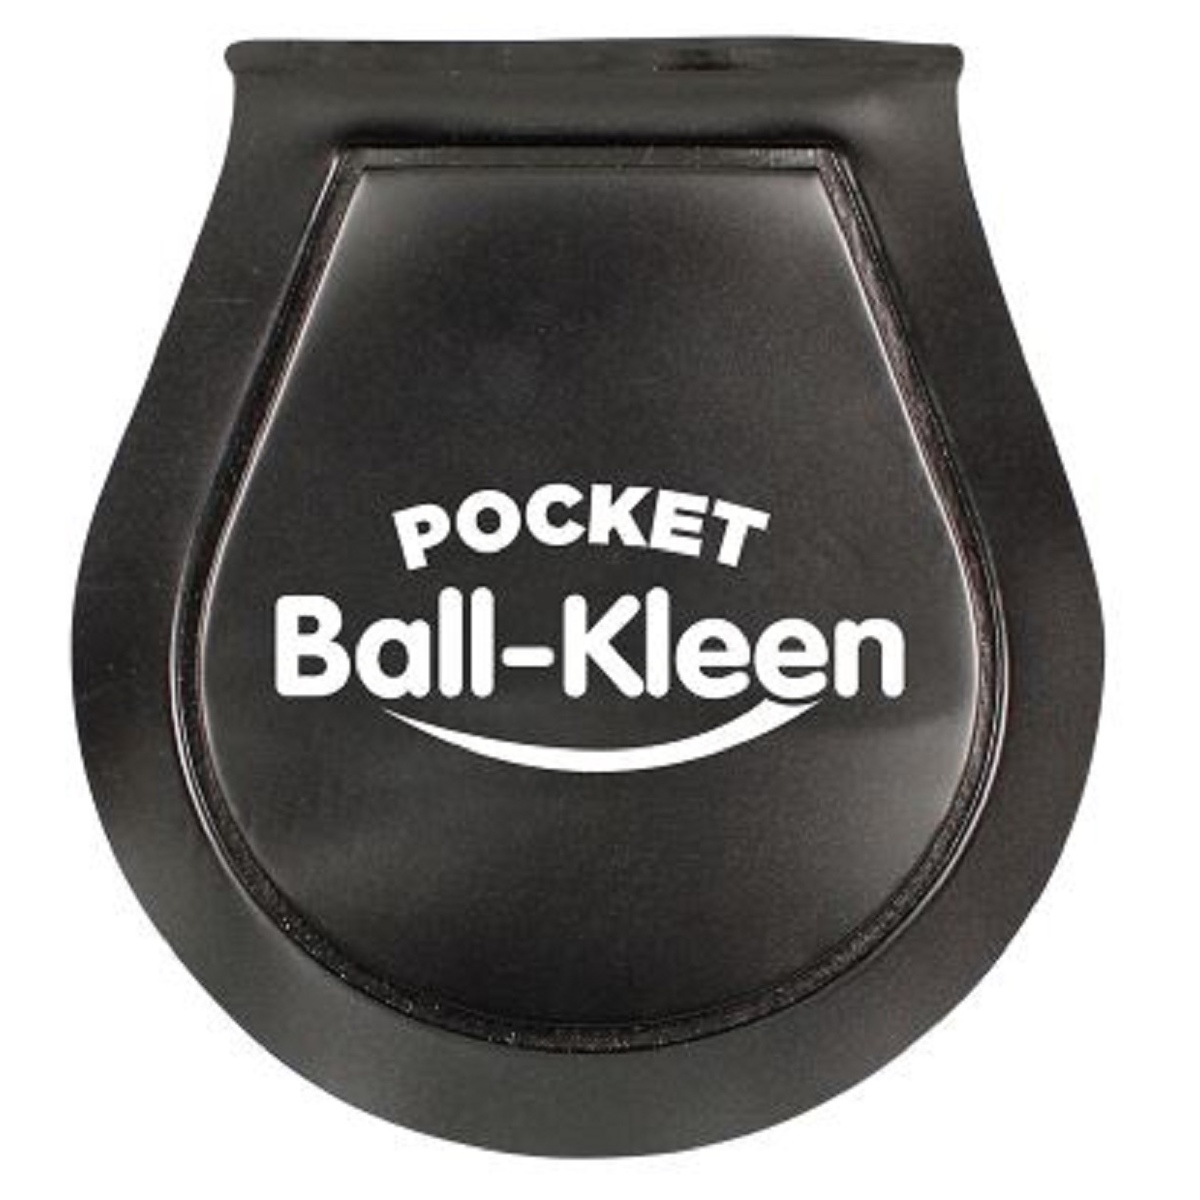 Pocket ball kleen